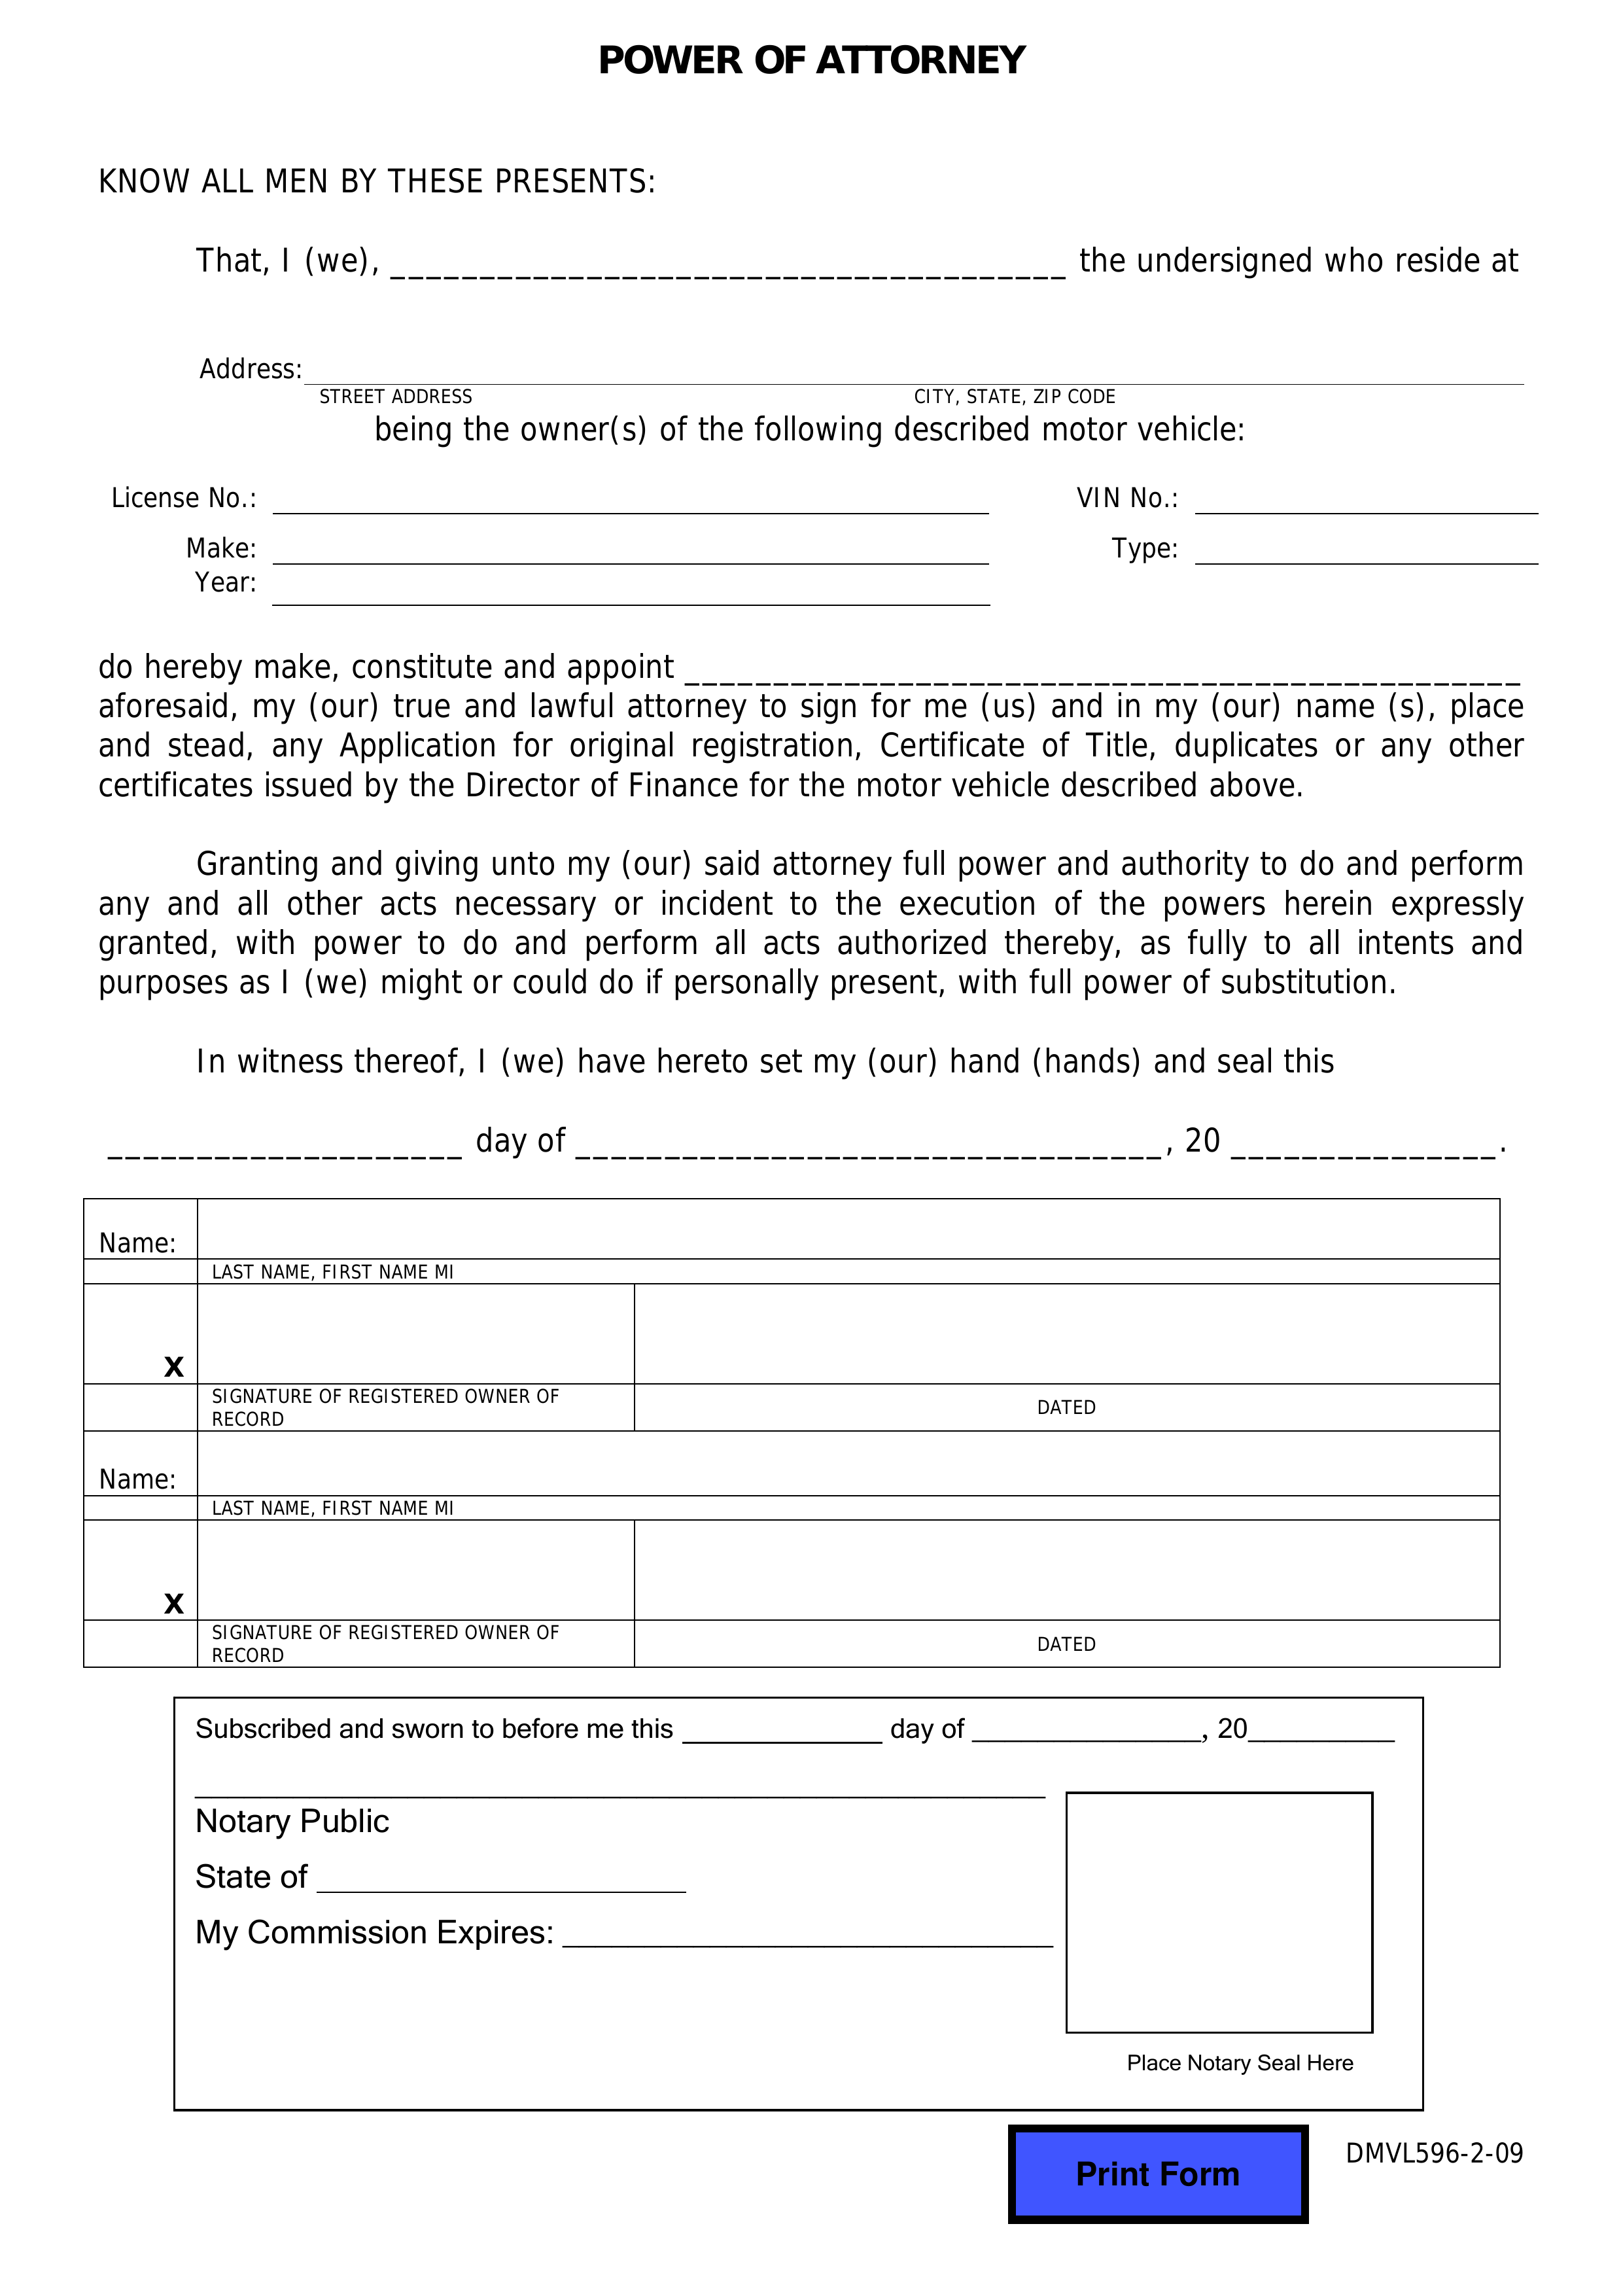 Hawaii Motor Vehicle Power of Attorney (Form DMVL596-2-09)